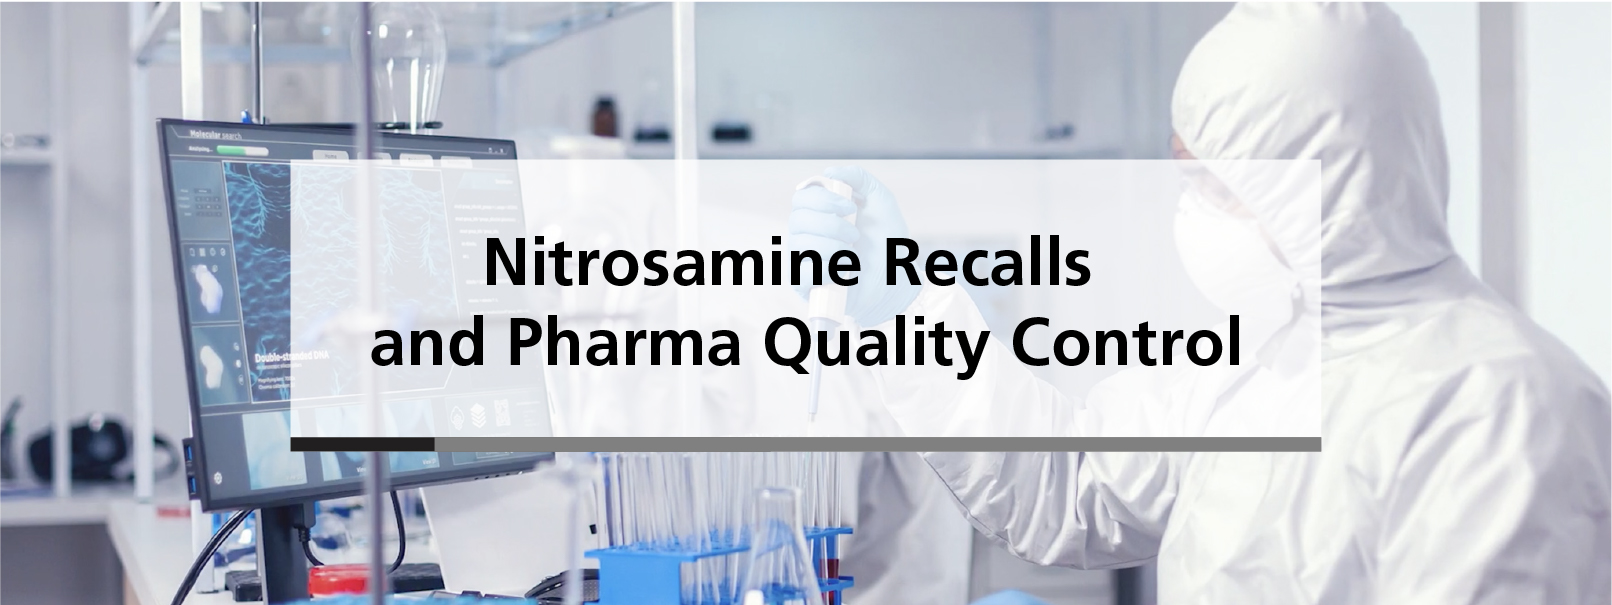 Nitrosamine Recalls and Pharma Quality Control